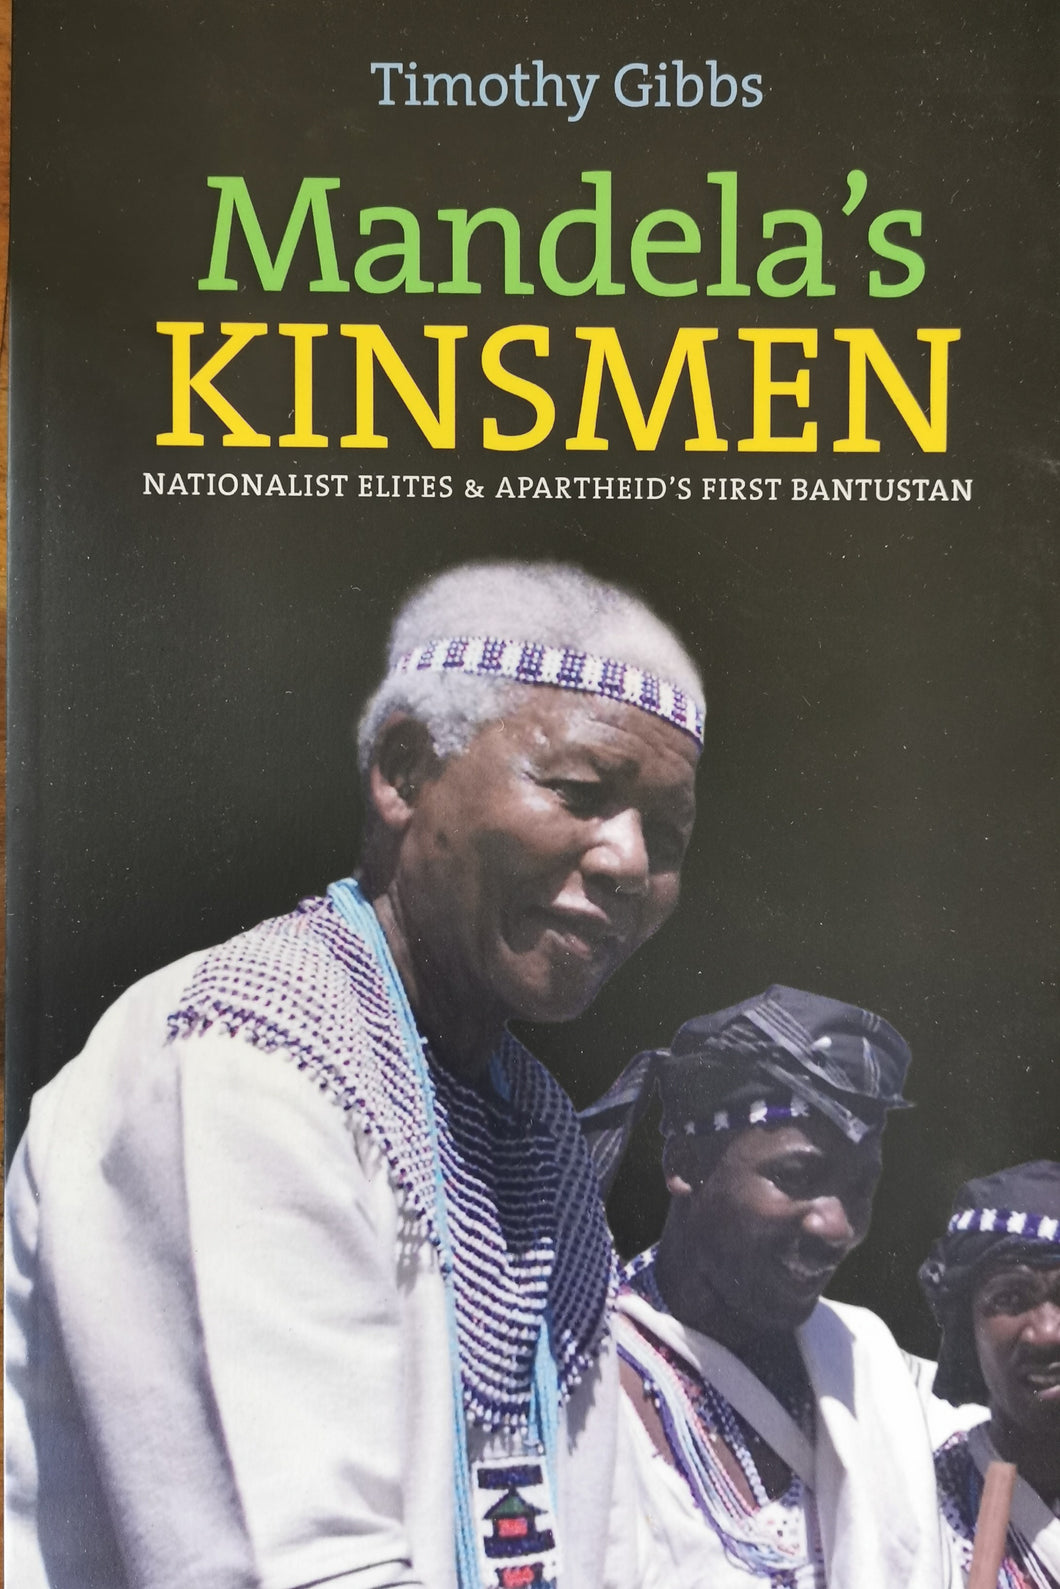 Mandela's Kinsmen: Nationalist Elites and Apartheid's First Bantustan by Tim Gibbs